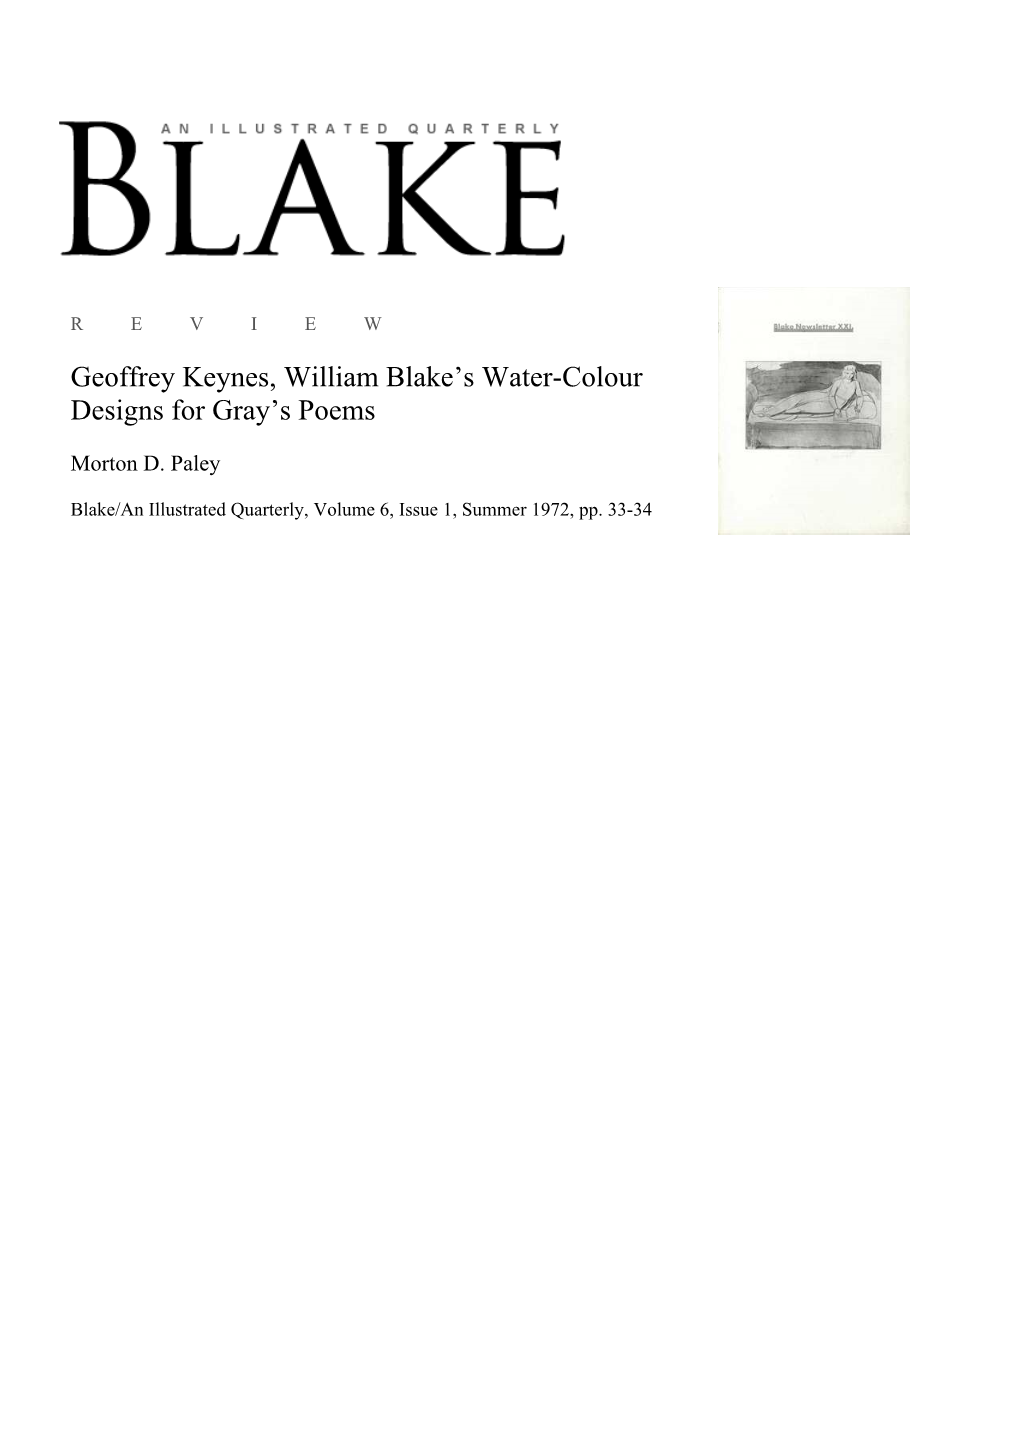 Geoffrey Keynes, William Blake's Water-Colour Designs for Gray's